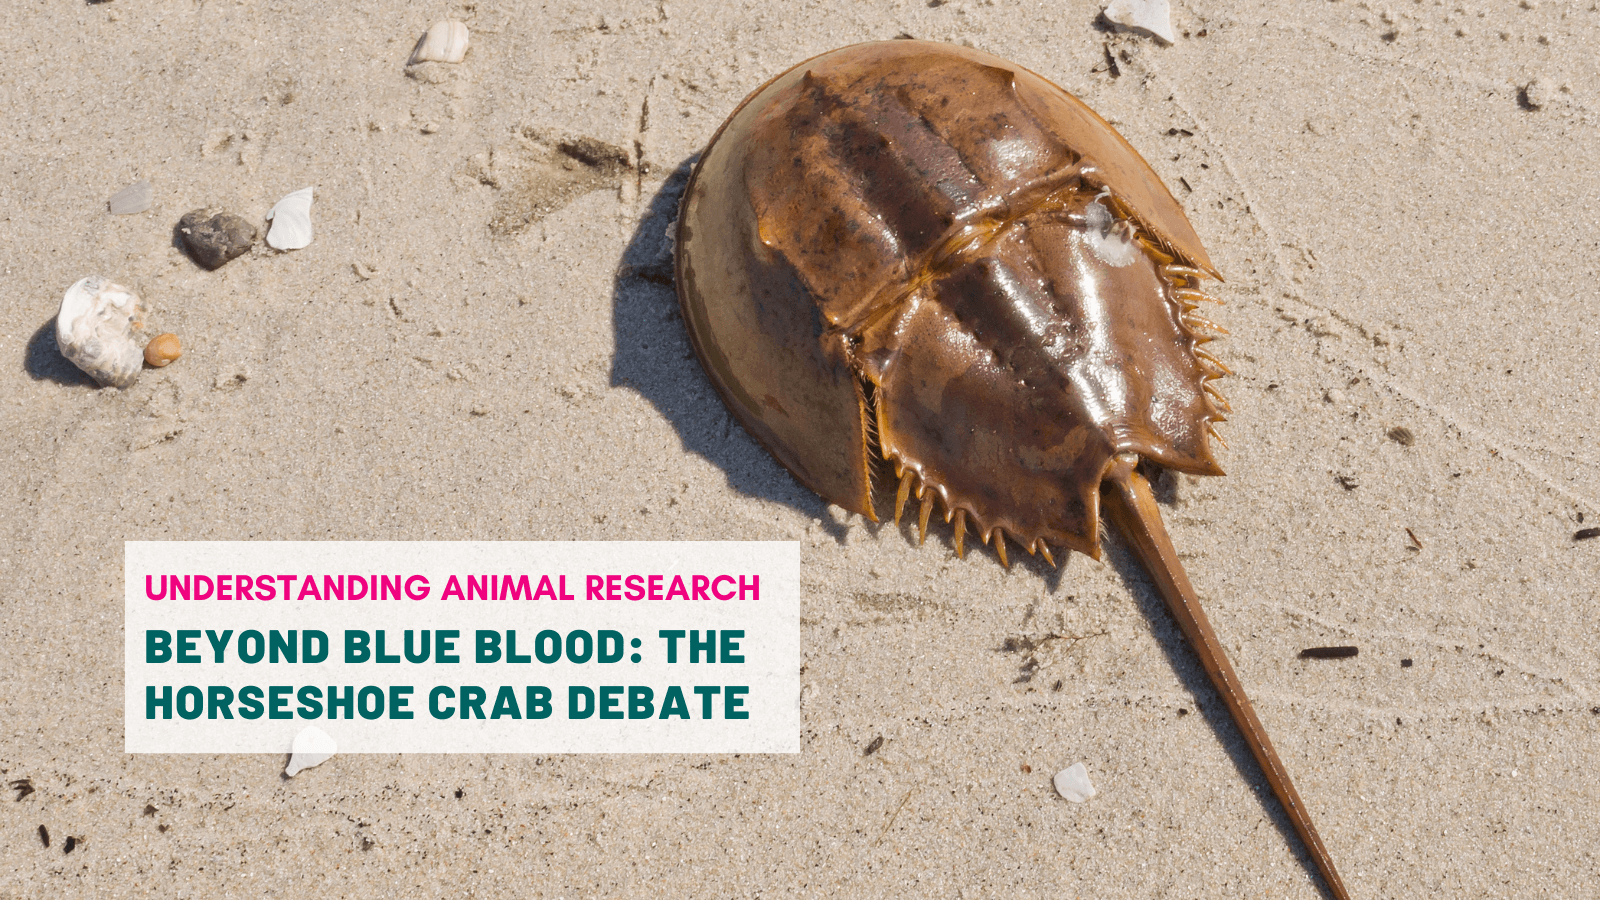 Beyond blue blood: the horseshoe crab debate